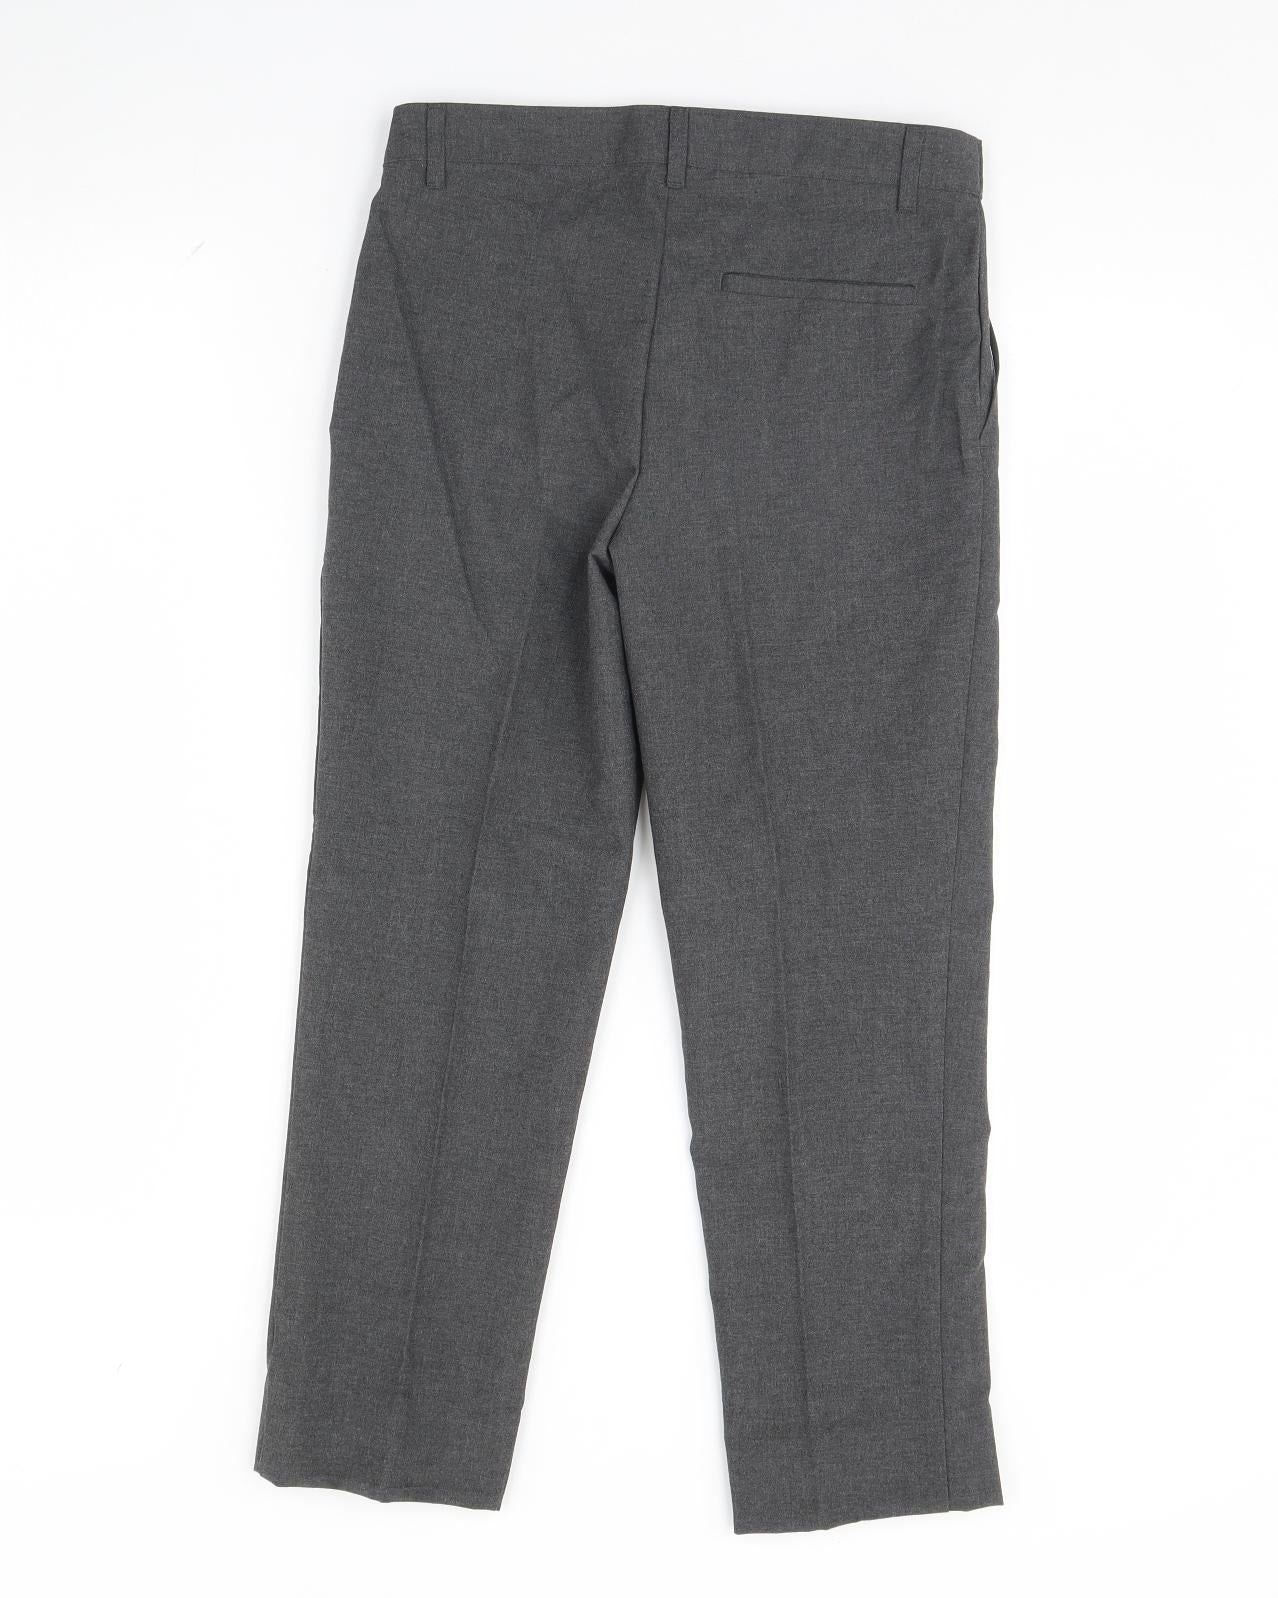 m&s Boys Grey   Dress Pants Trousers Size 10 Years - school